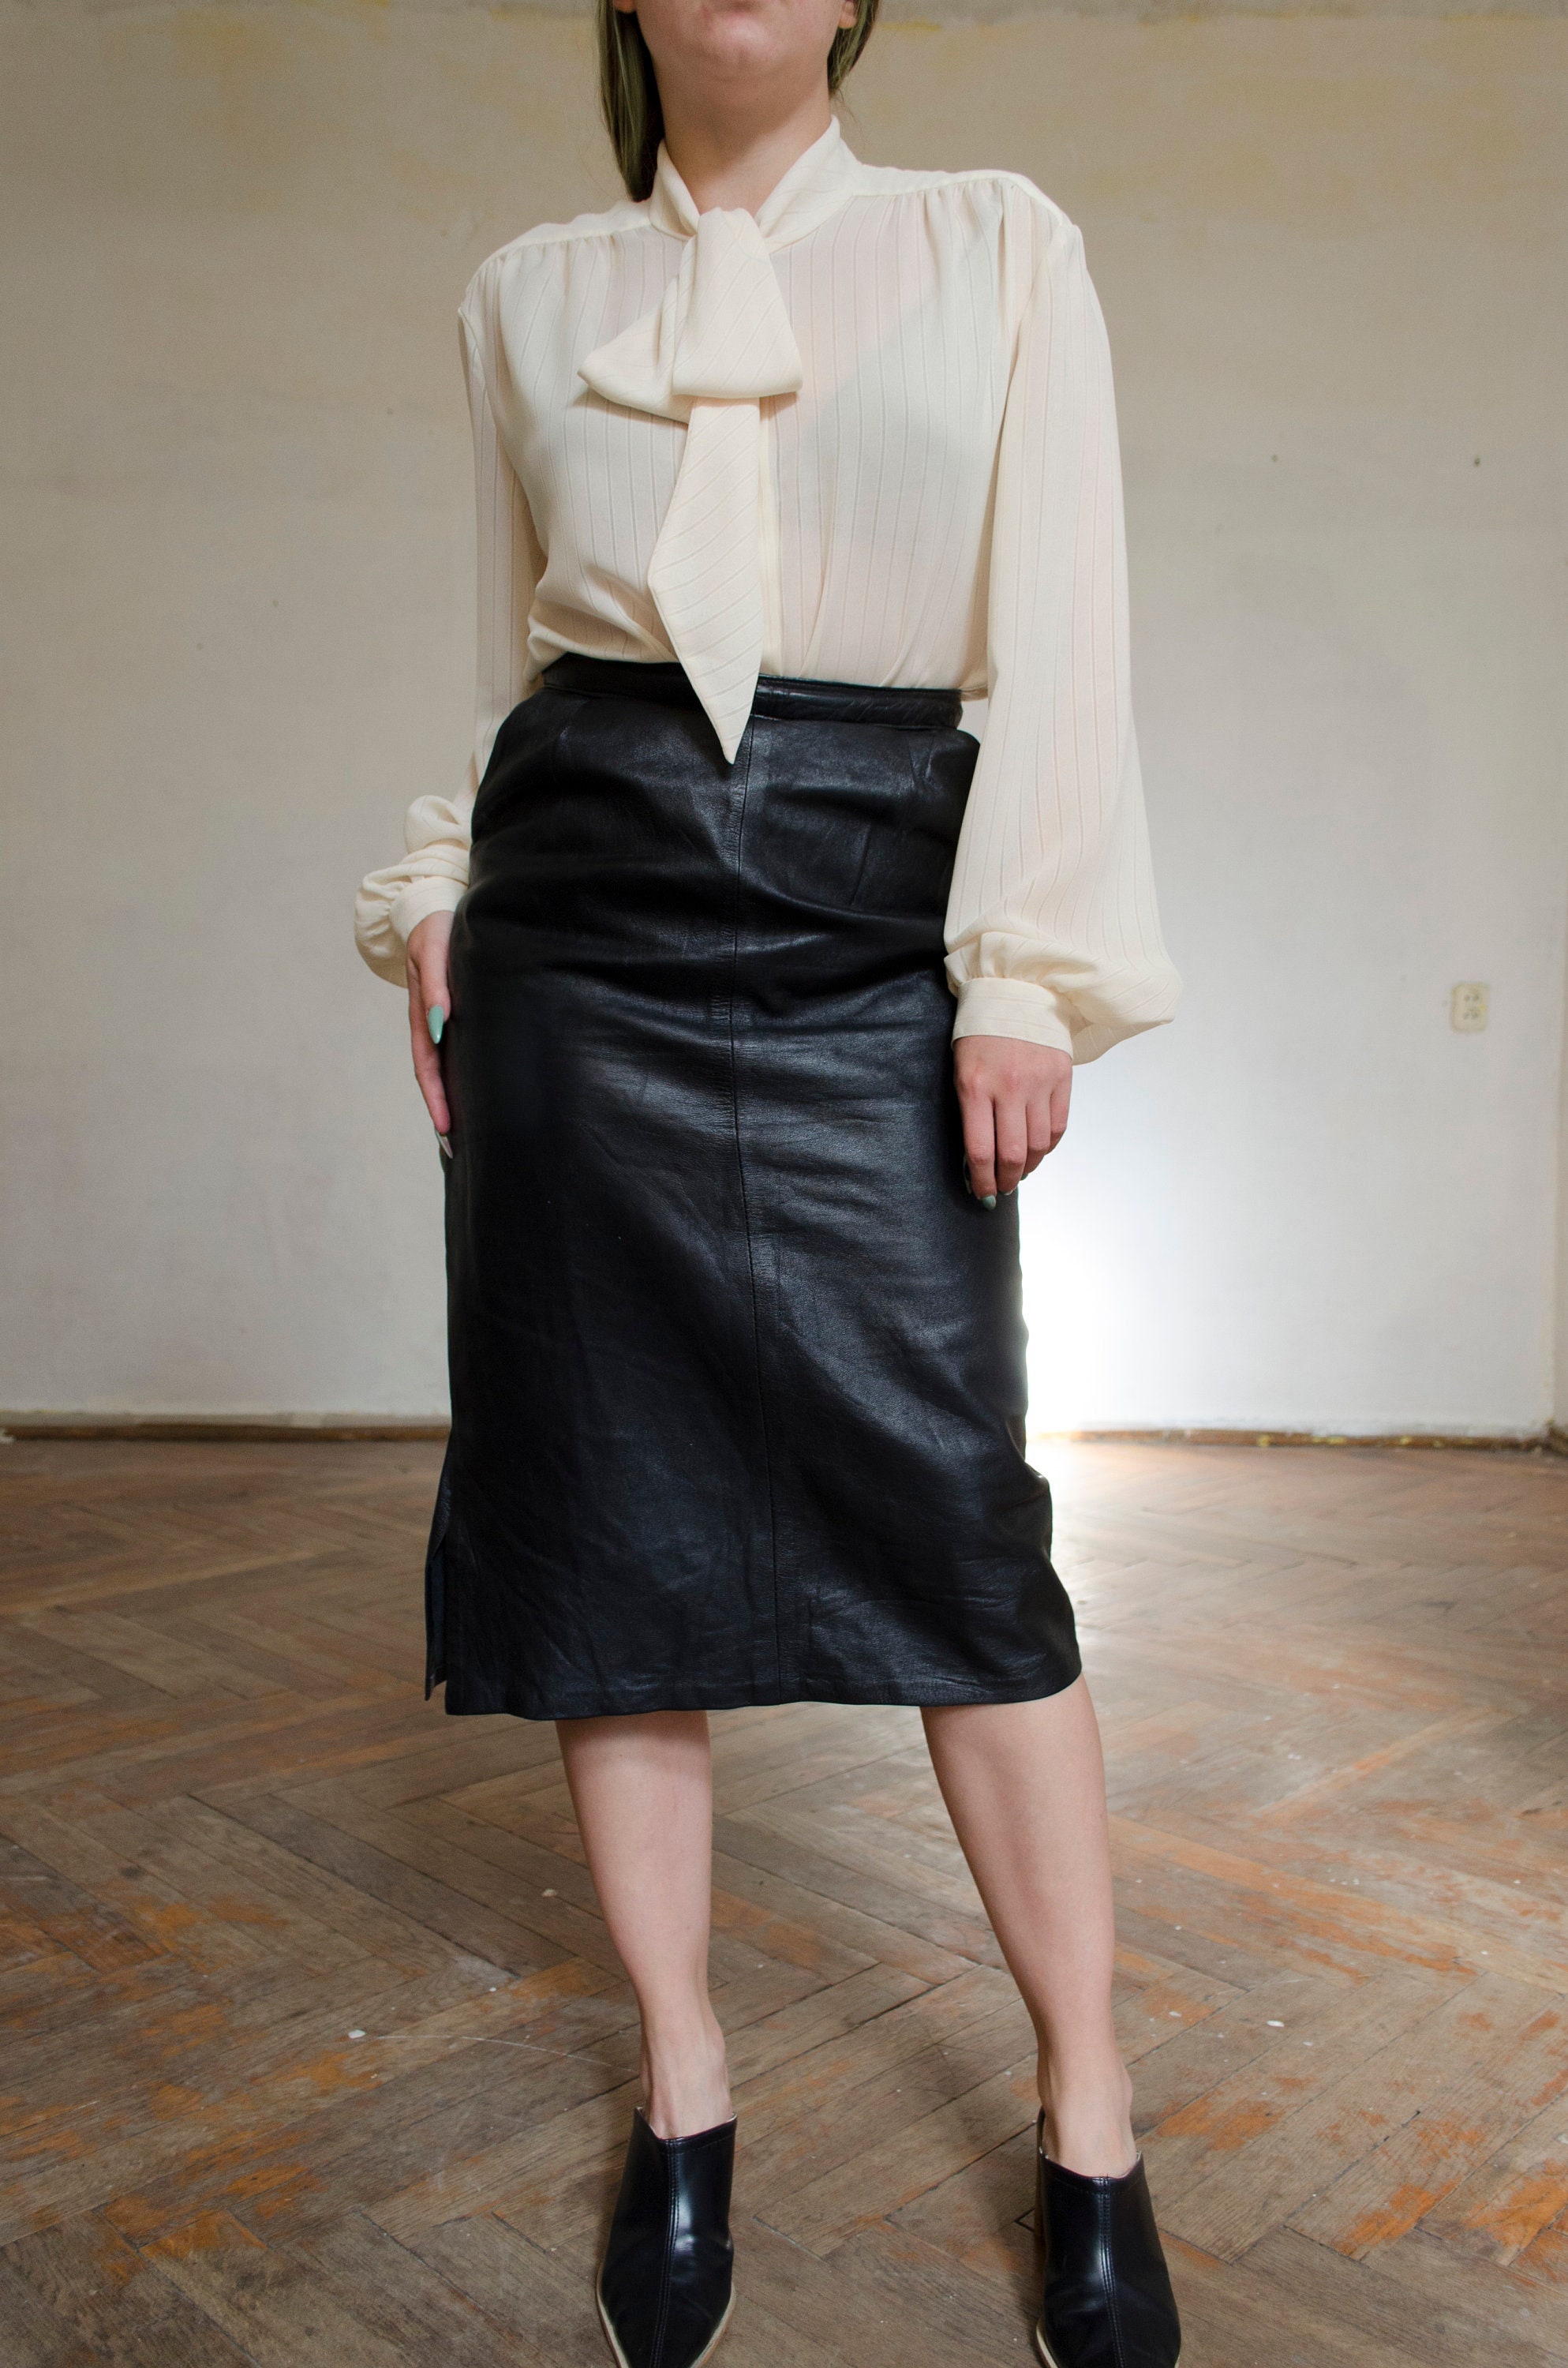 Vintage Guy Laroche leather skirt – IndigoStyle Vintage